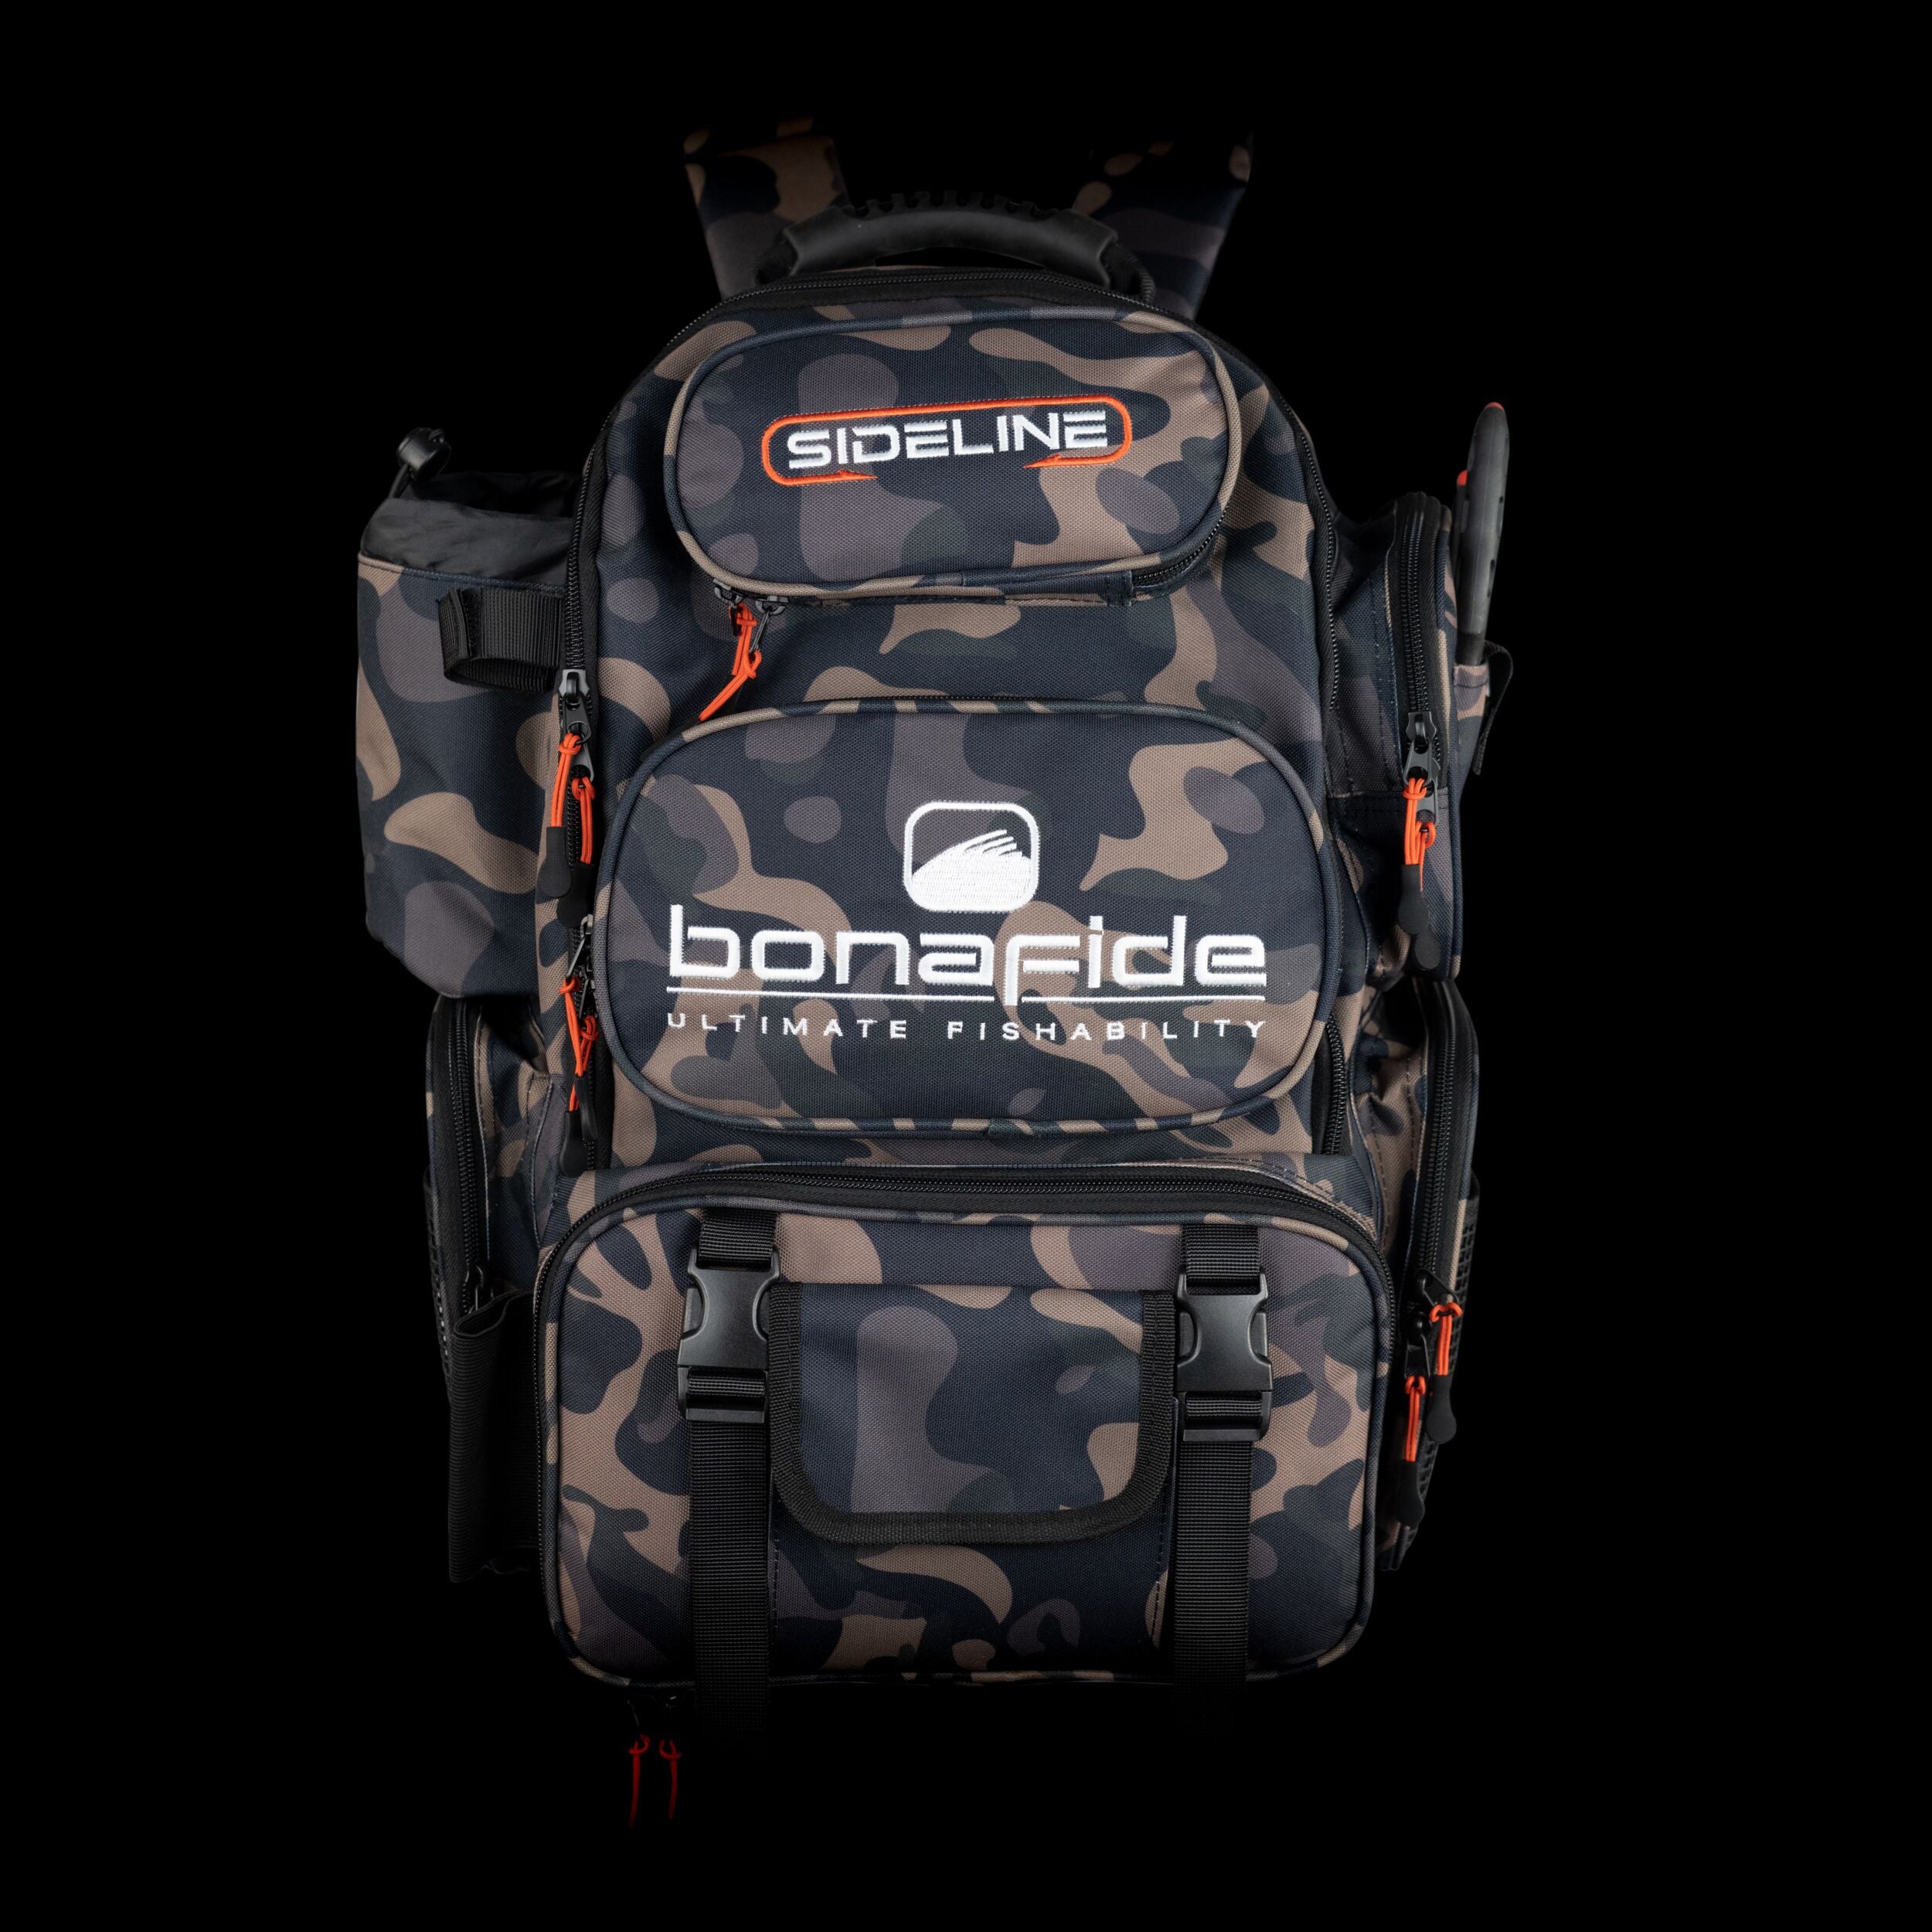 Bonafide Sideline Series Fishing Bags